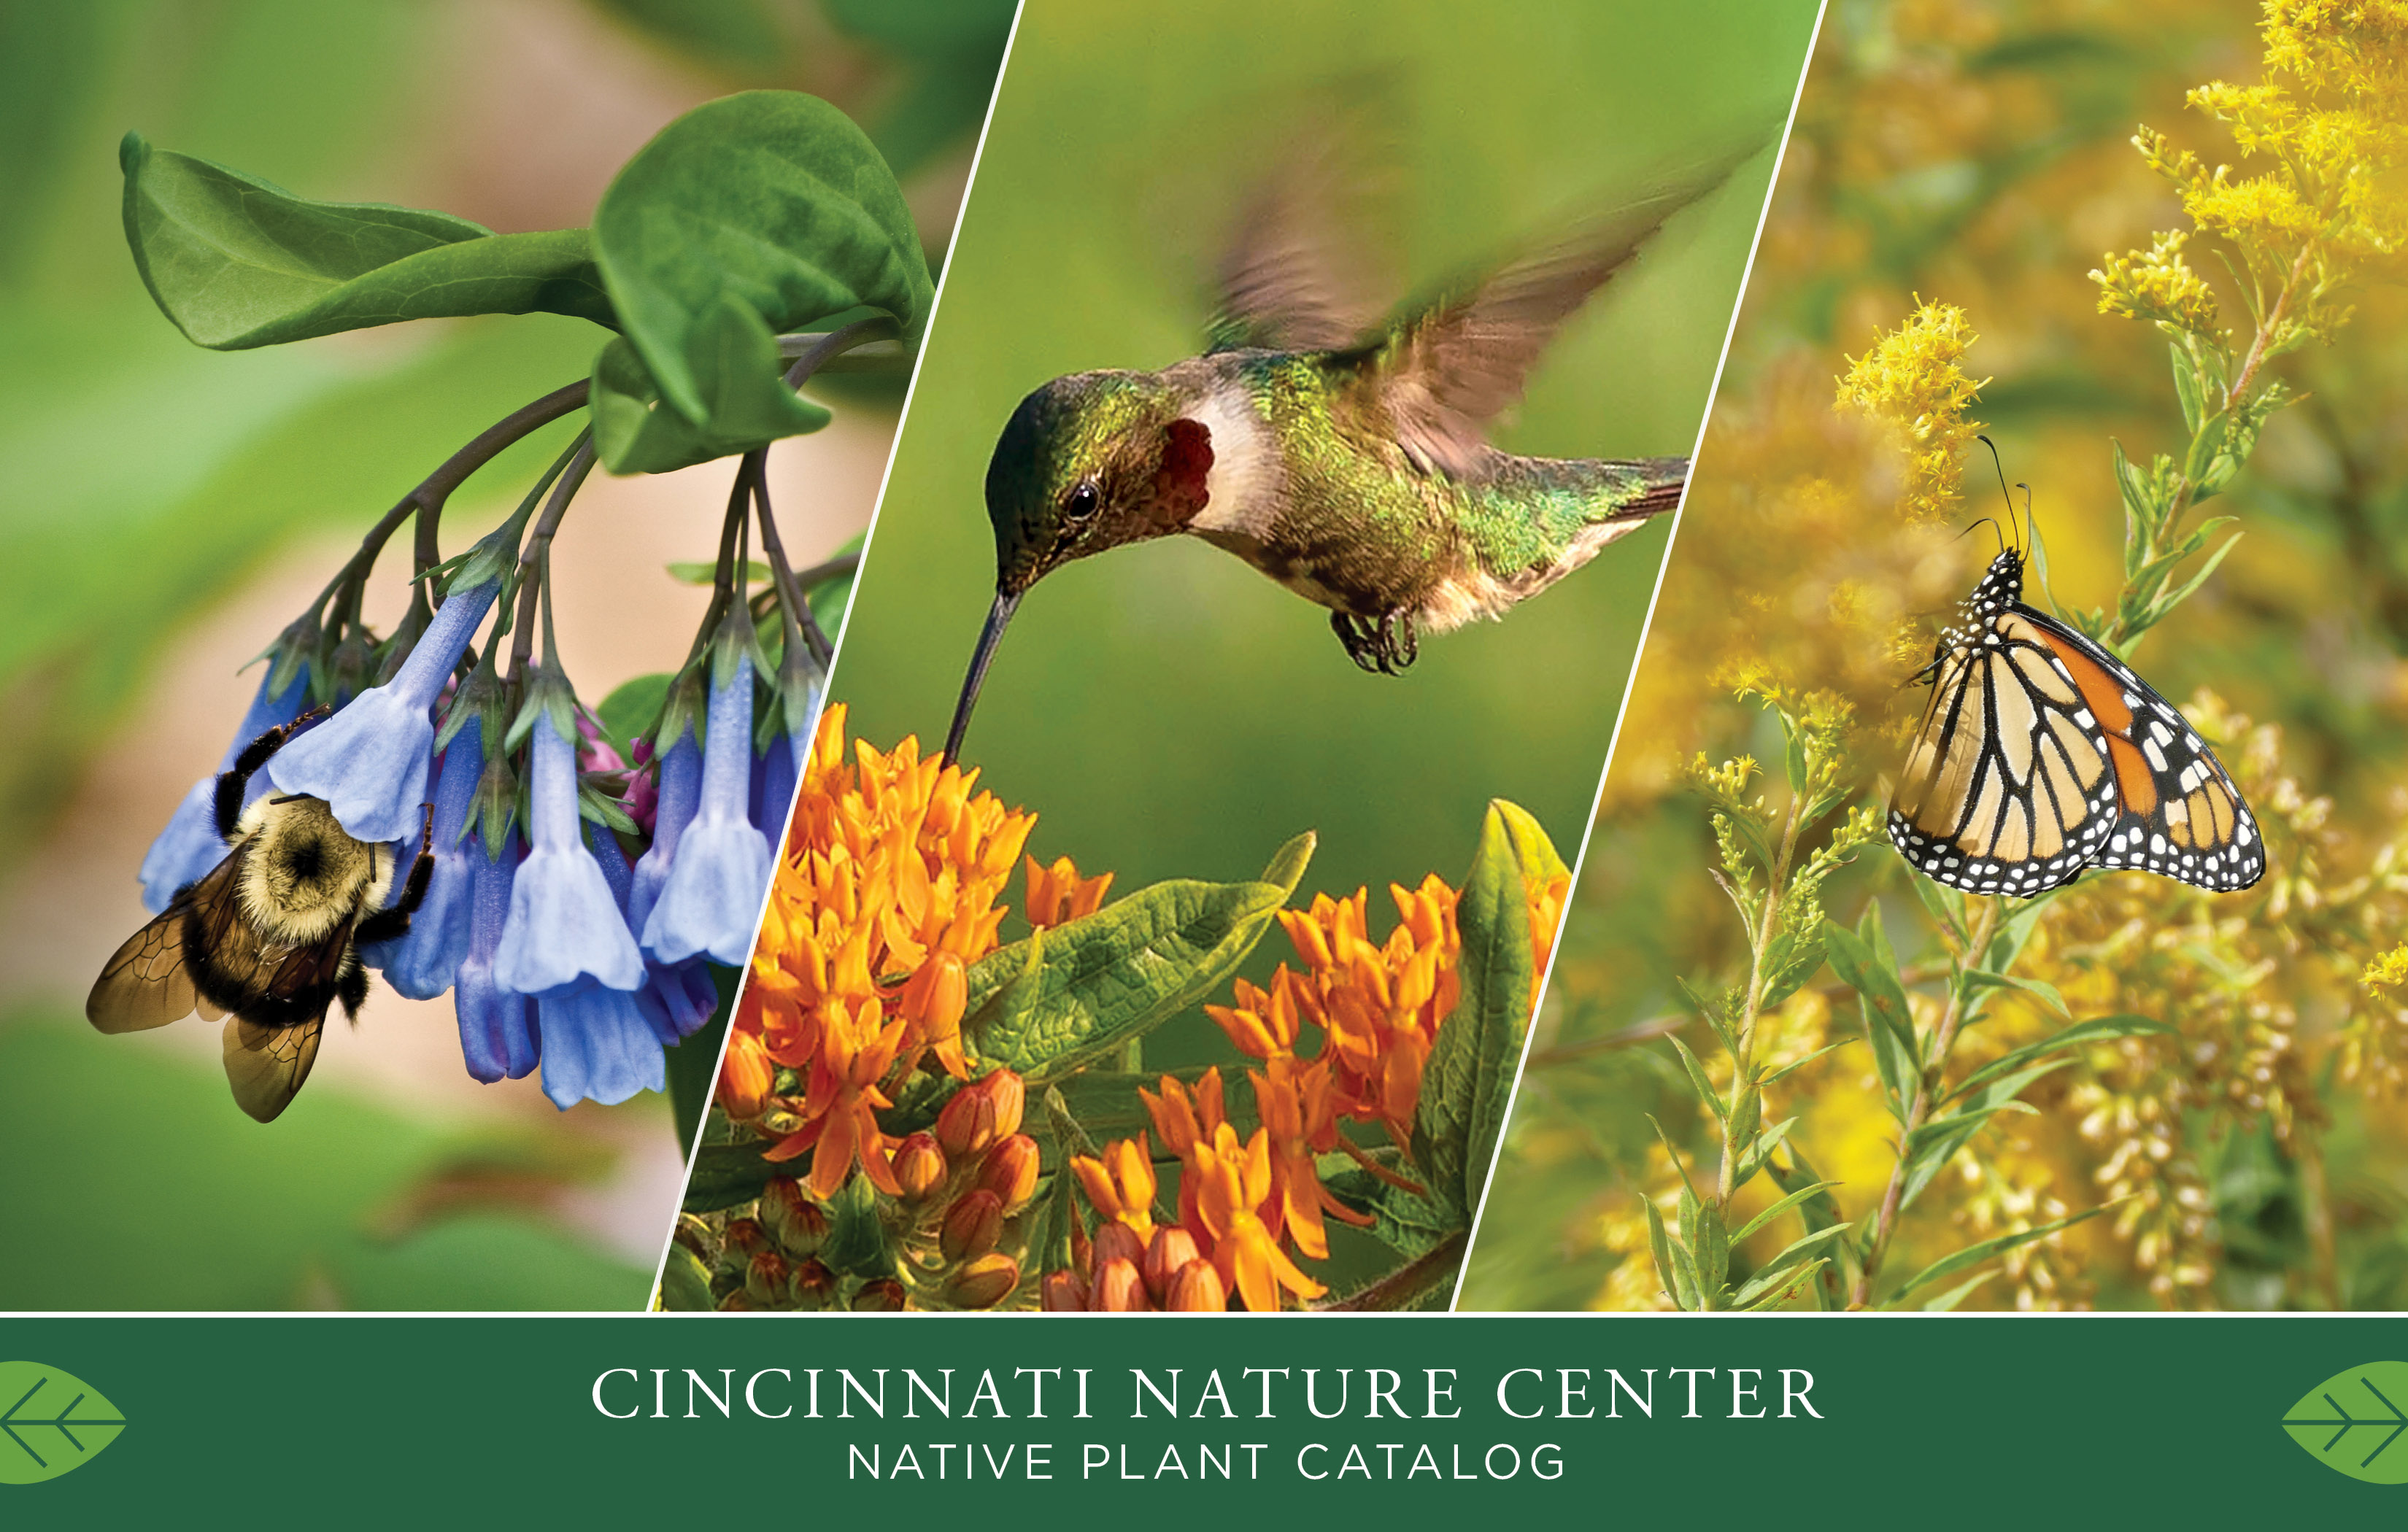 Cincinnati Nature Center's native plant catalog.